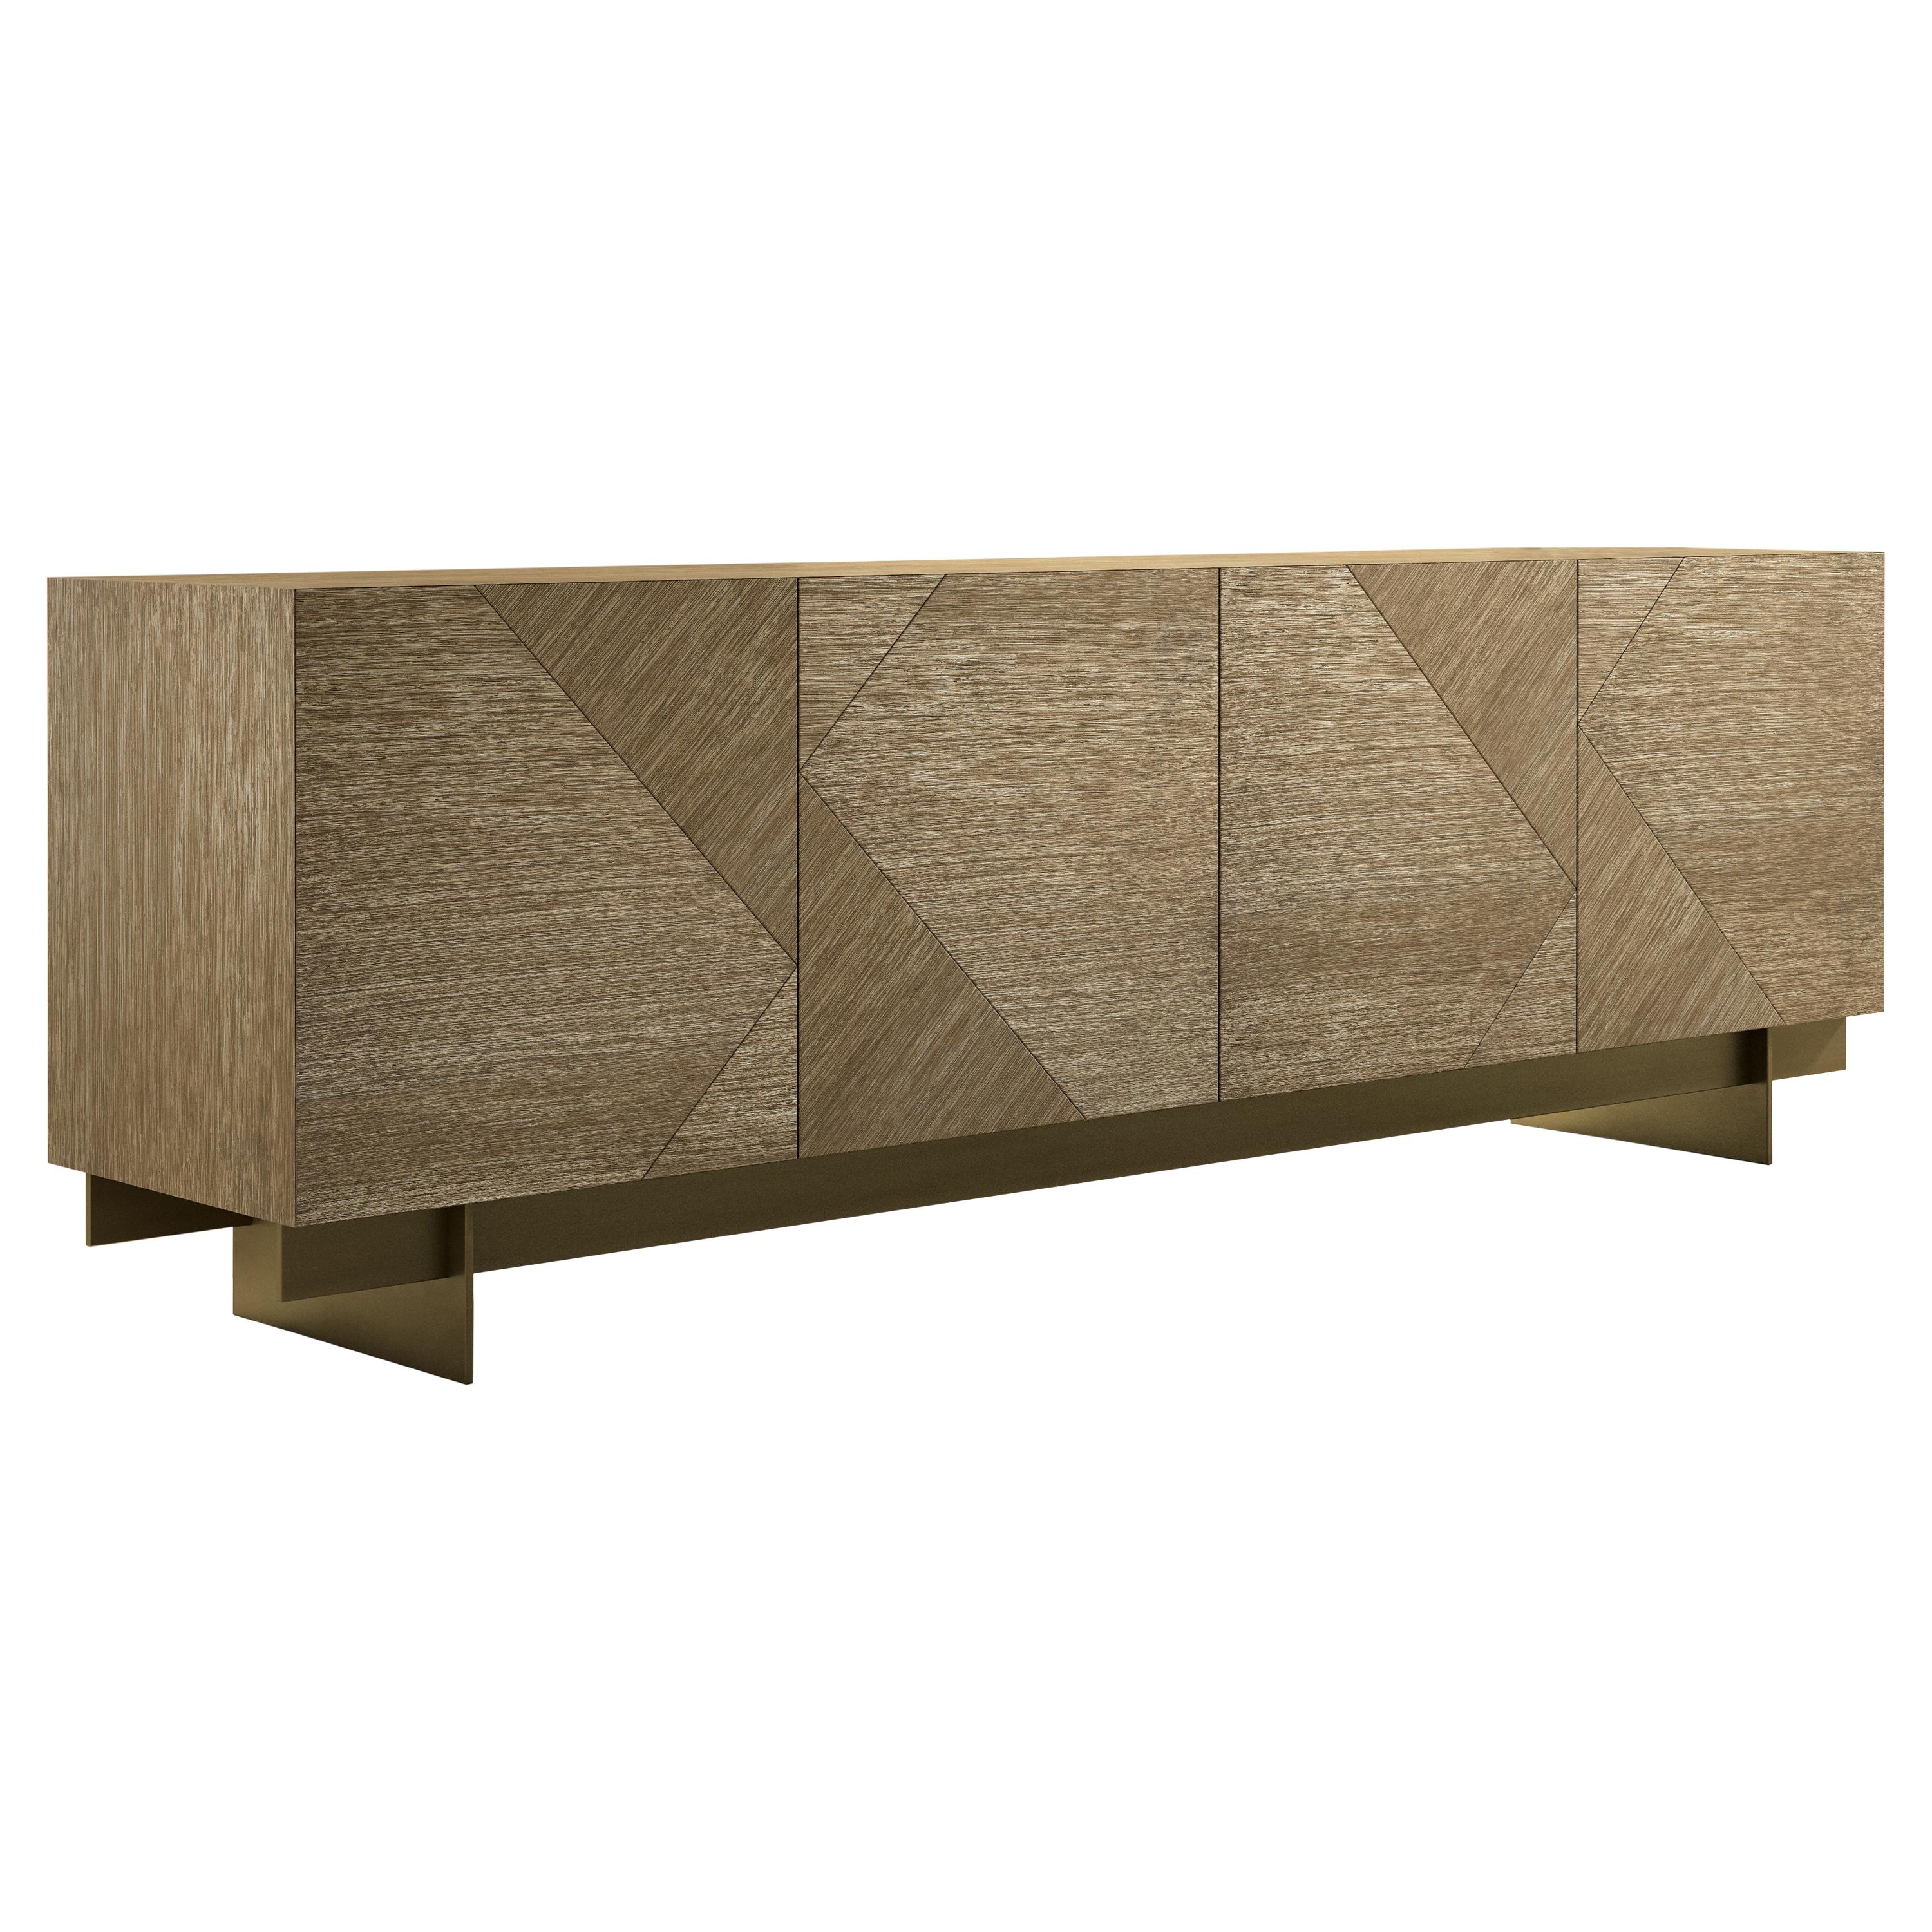 Laurameroni „Tatami“ Modernes Sideboard aus Holz mit Tatami-Dekorationen